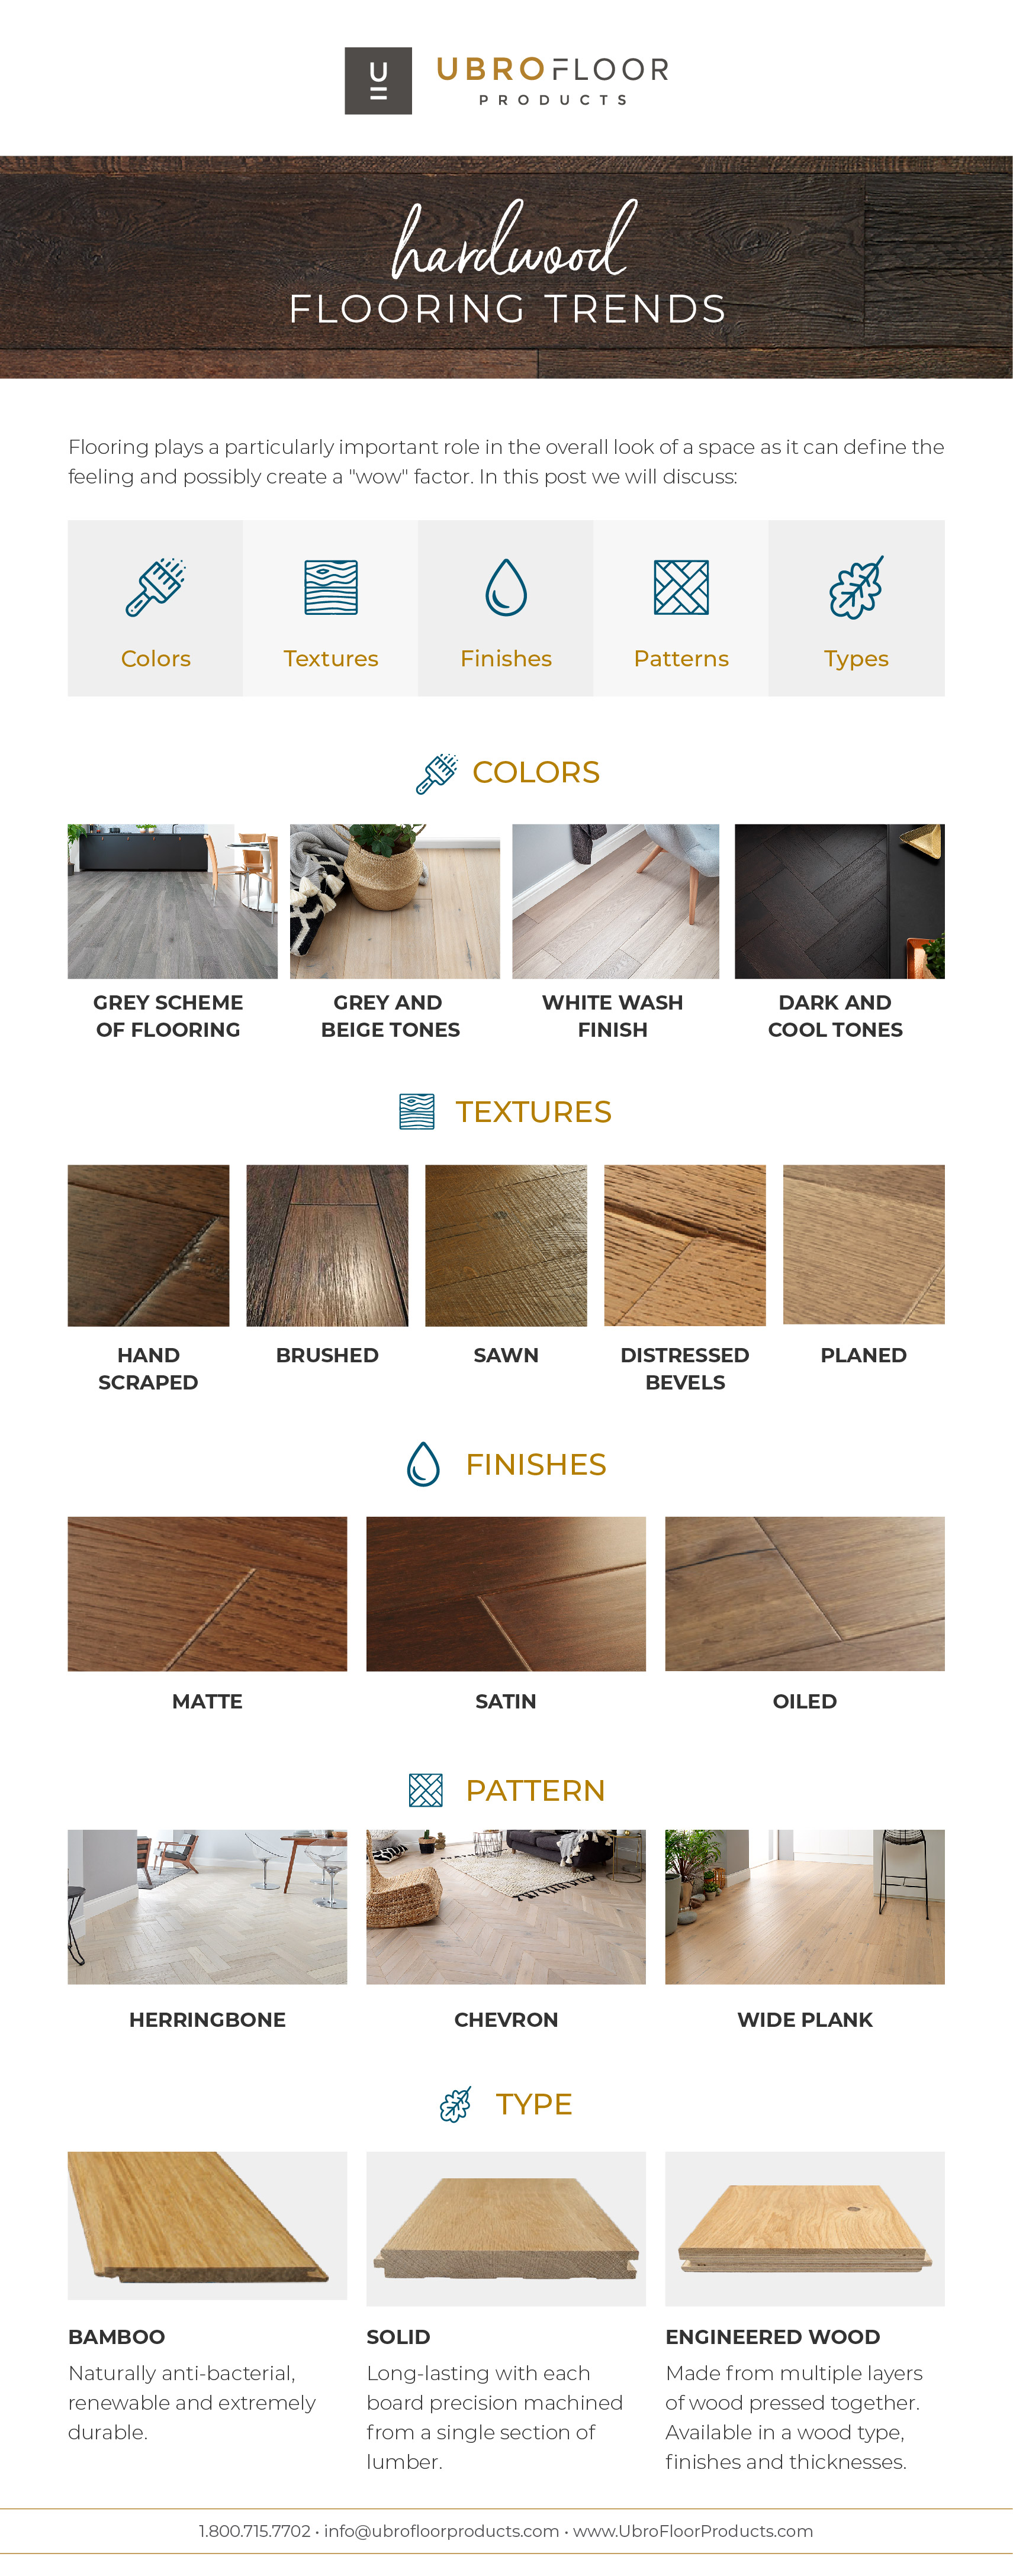 Hardwood flooring trends 2018, hardwood flooring textures, hardwood flooring patterns, hardwood flooring infographic